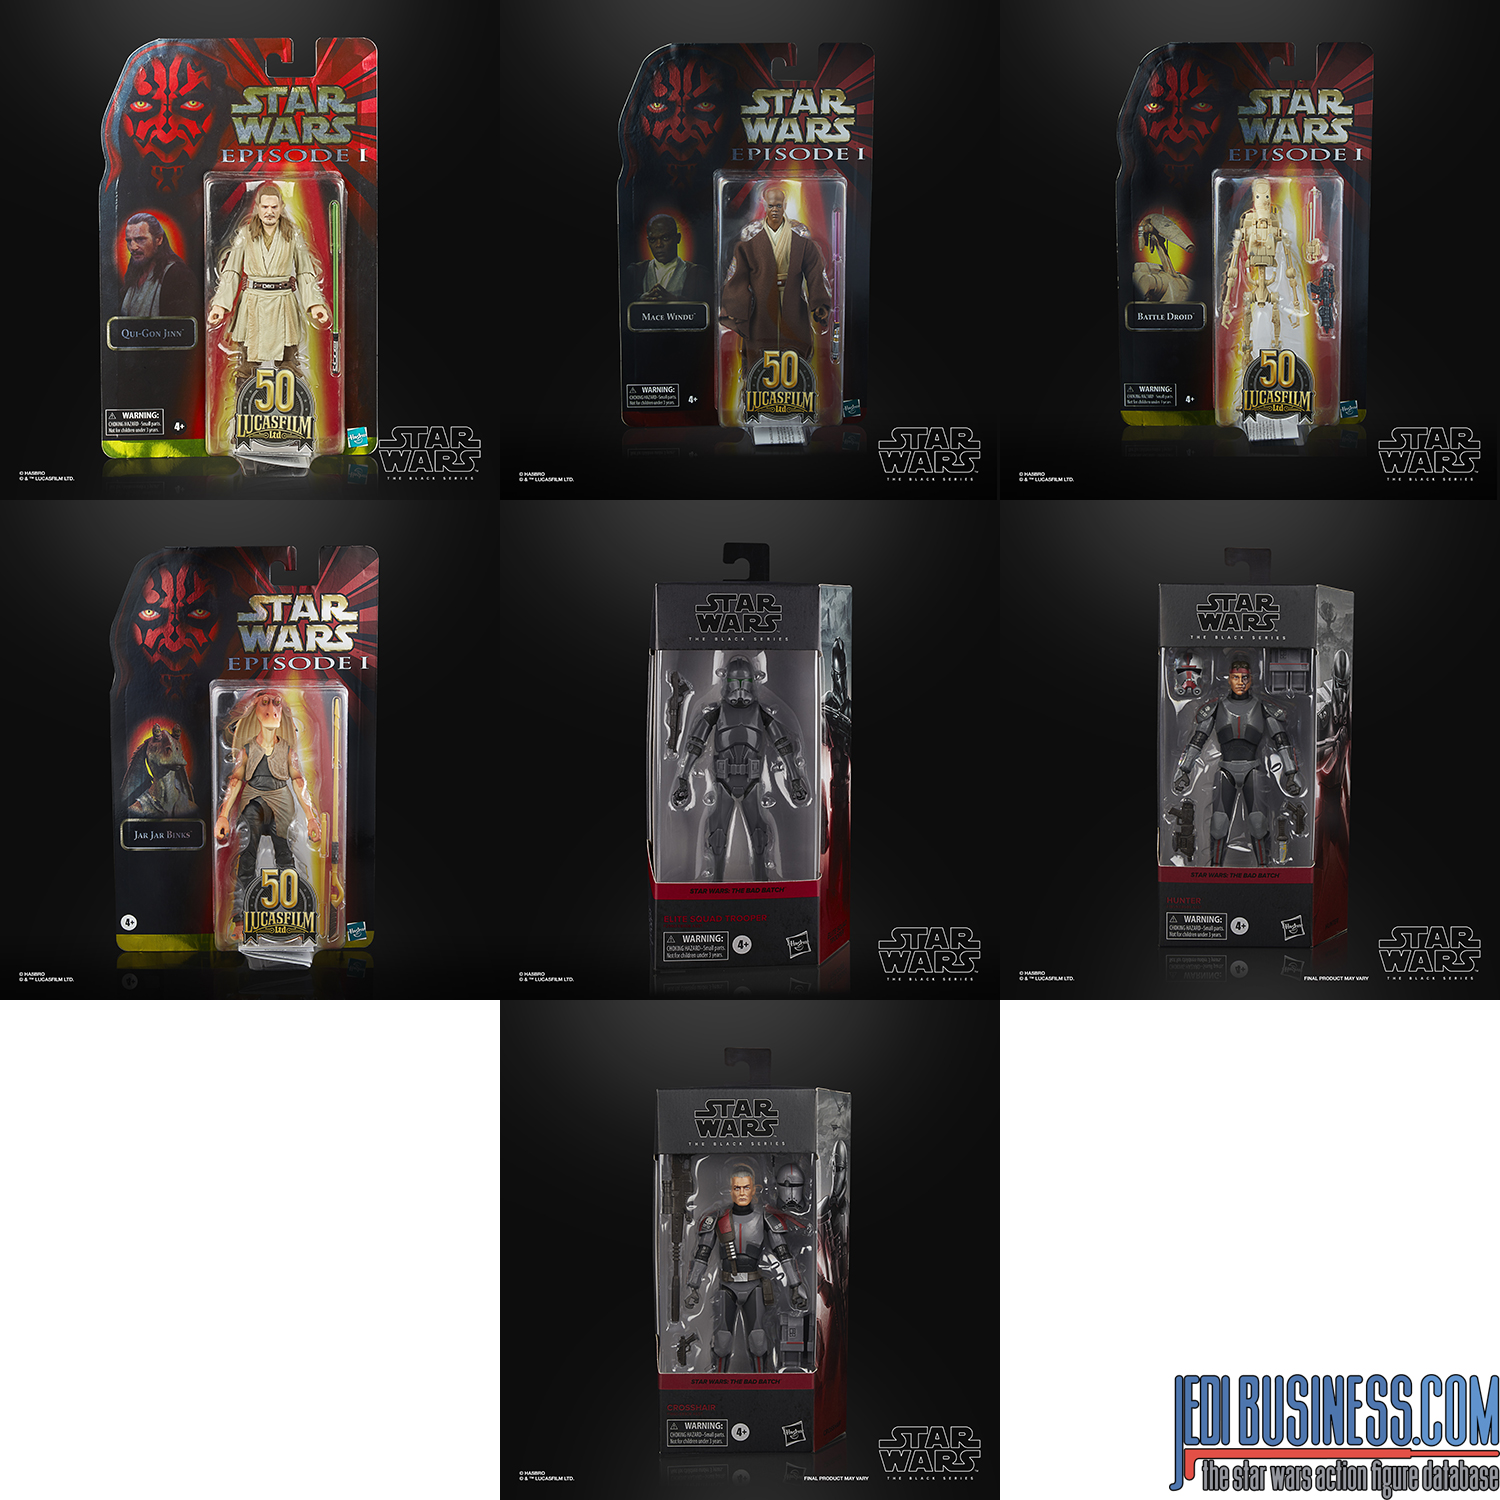 Star Wars The Black Series figures